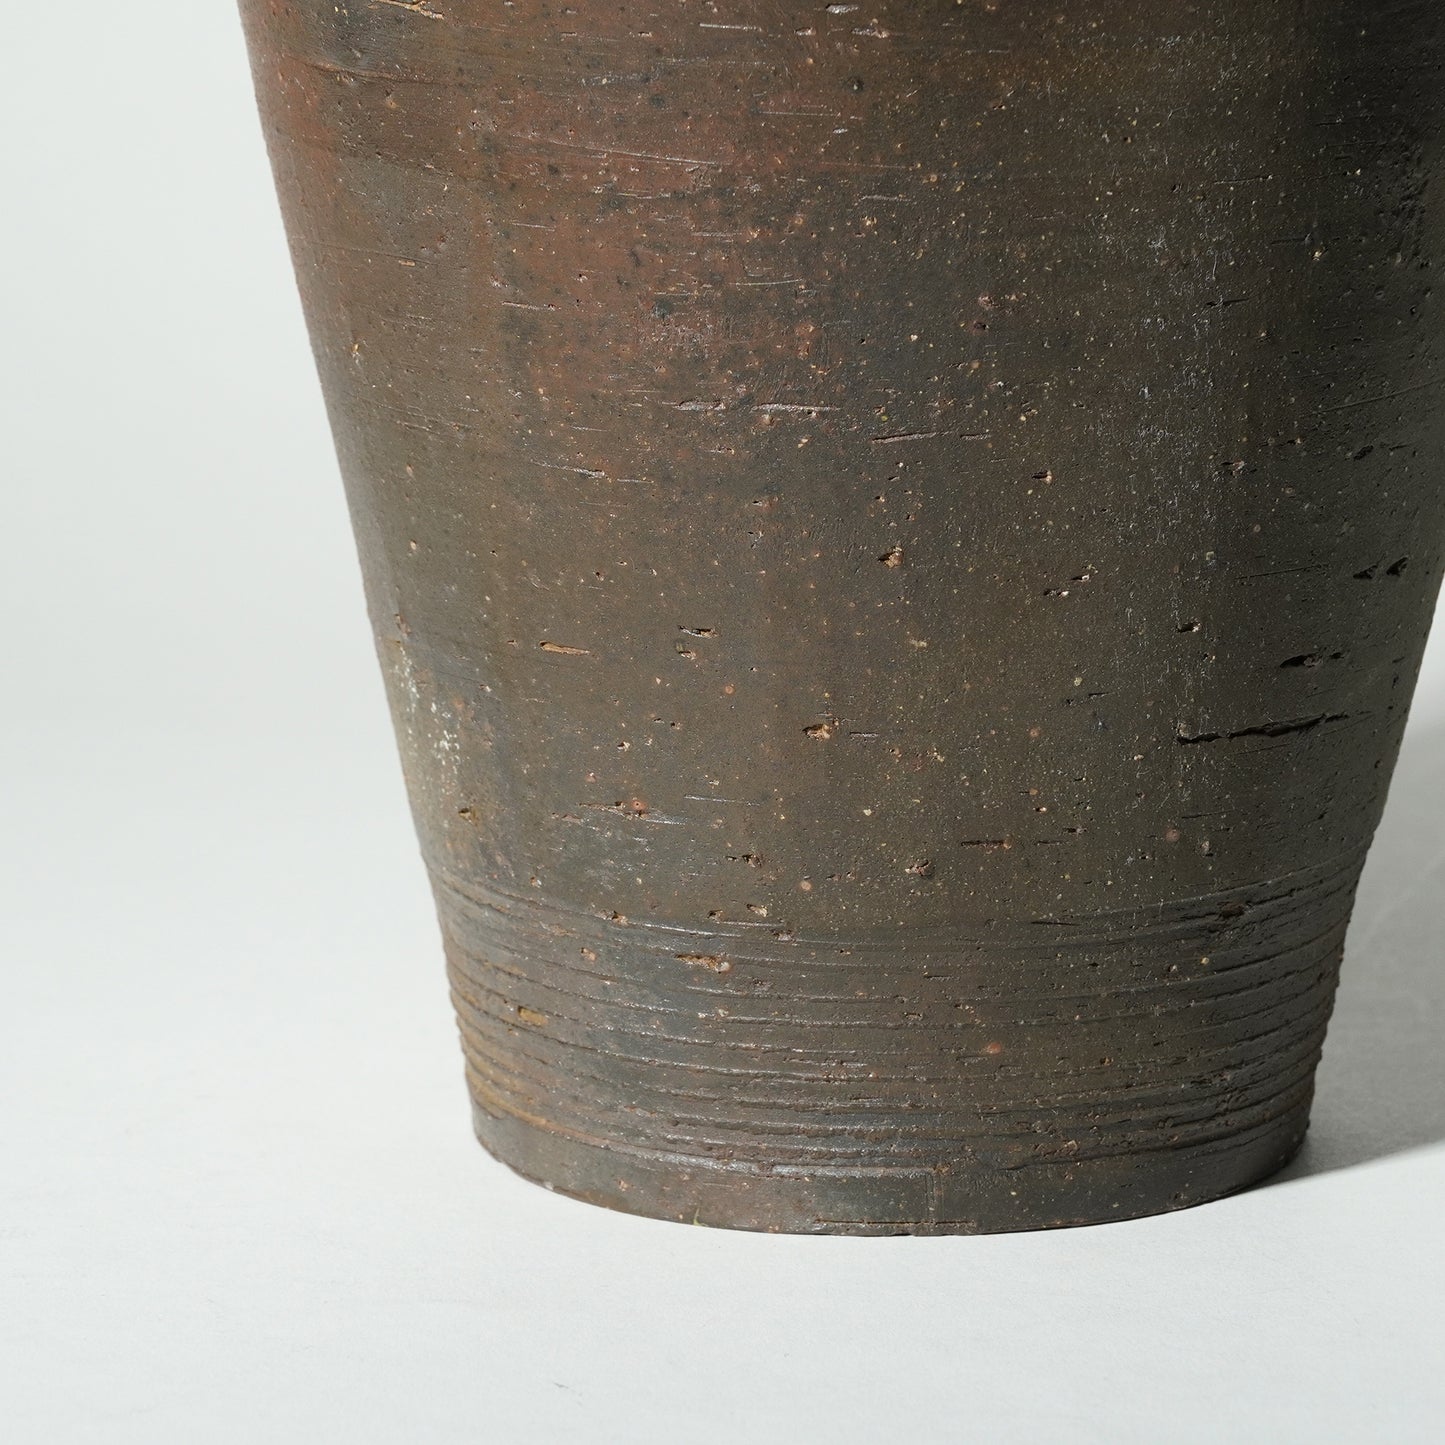 Ichiro Mori Japanese pottery Bizen vase vessel object